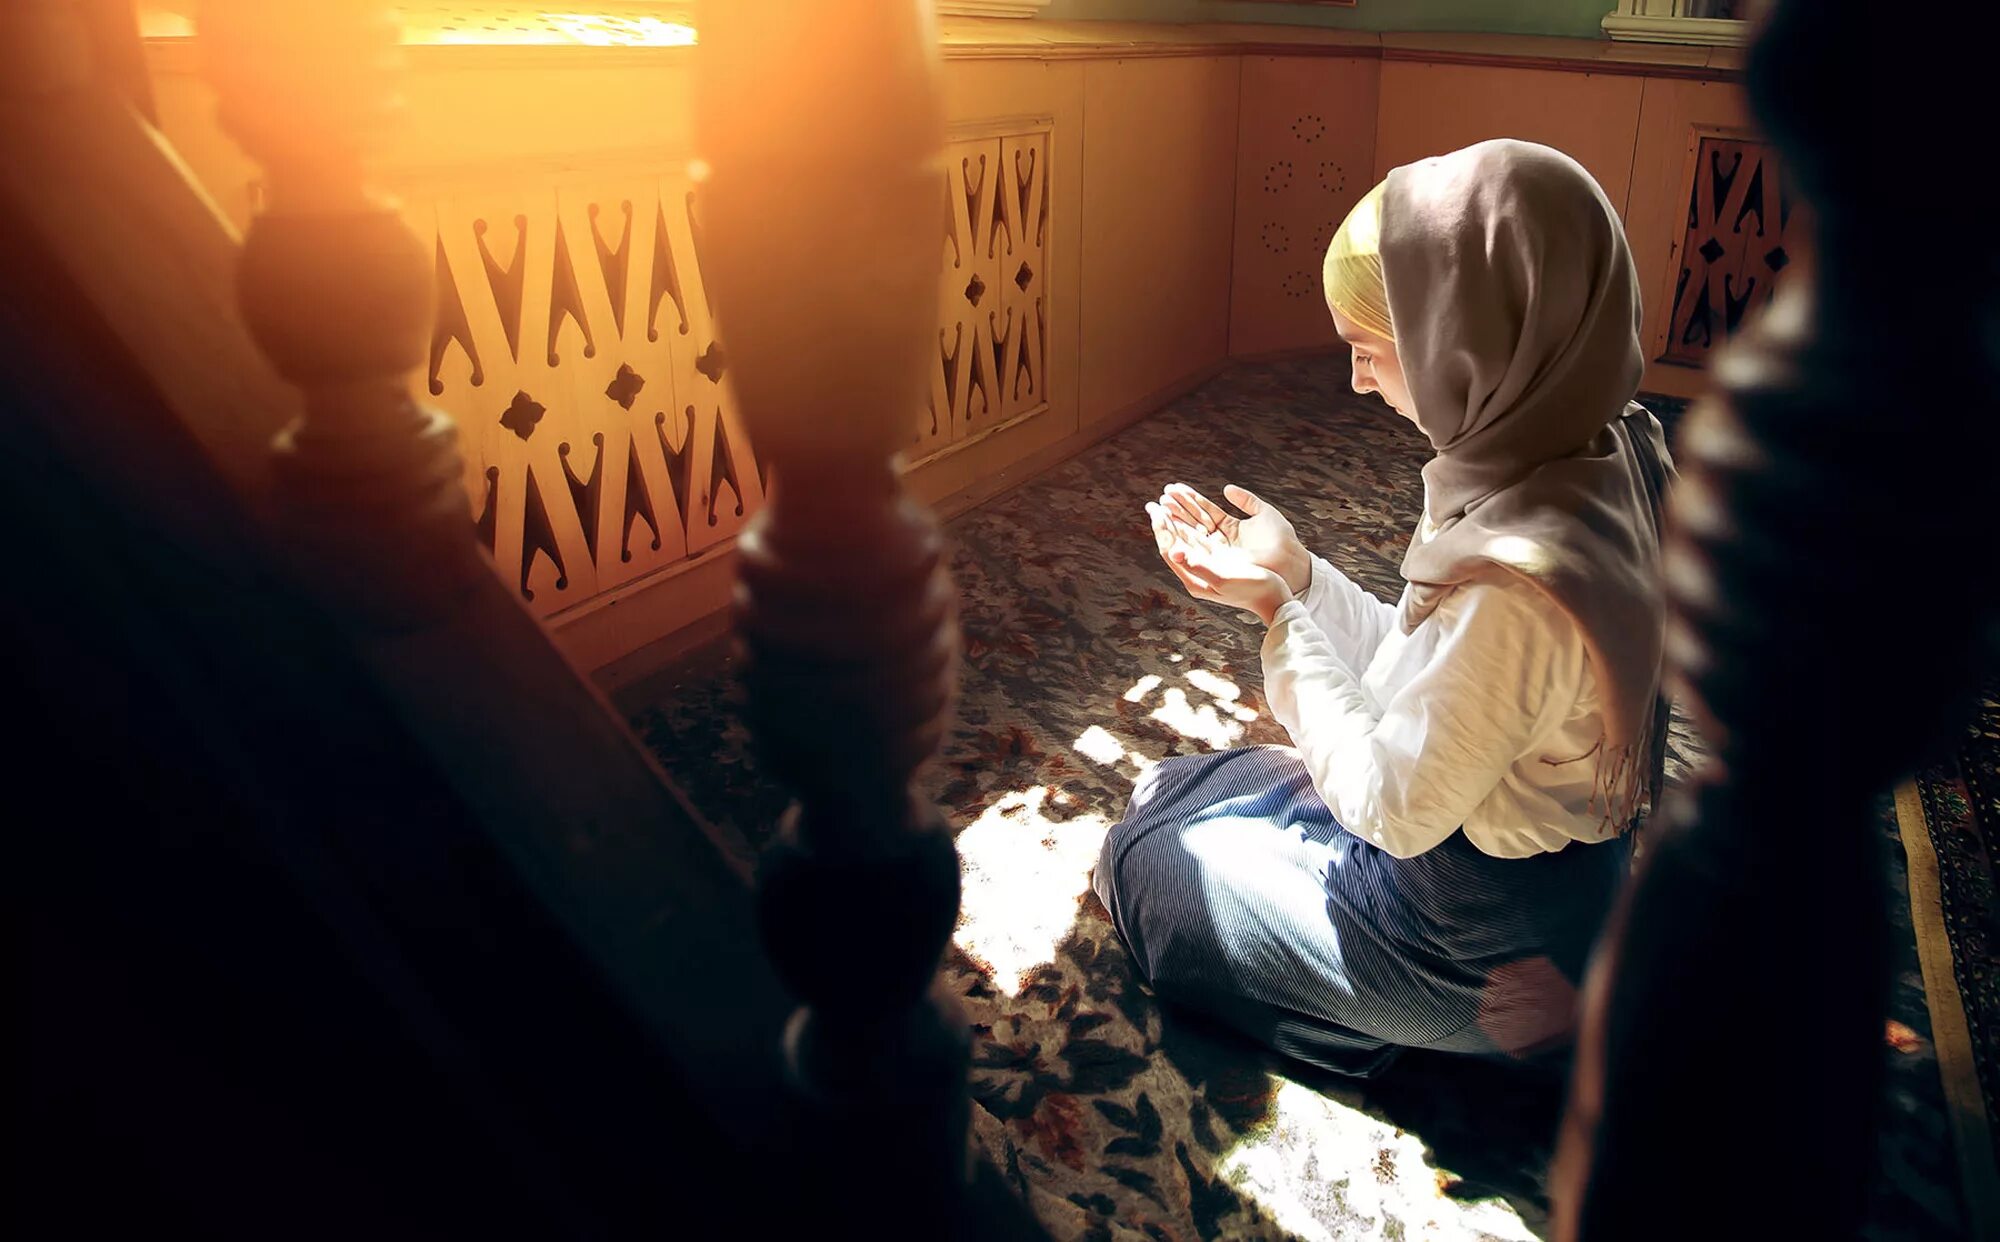 Ночная молитва мусульман. Мусульманин молится. Мусульманка молится в мечети. Женщины в мечети. Женщины молятся в мечети.